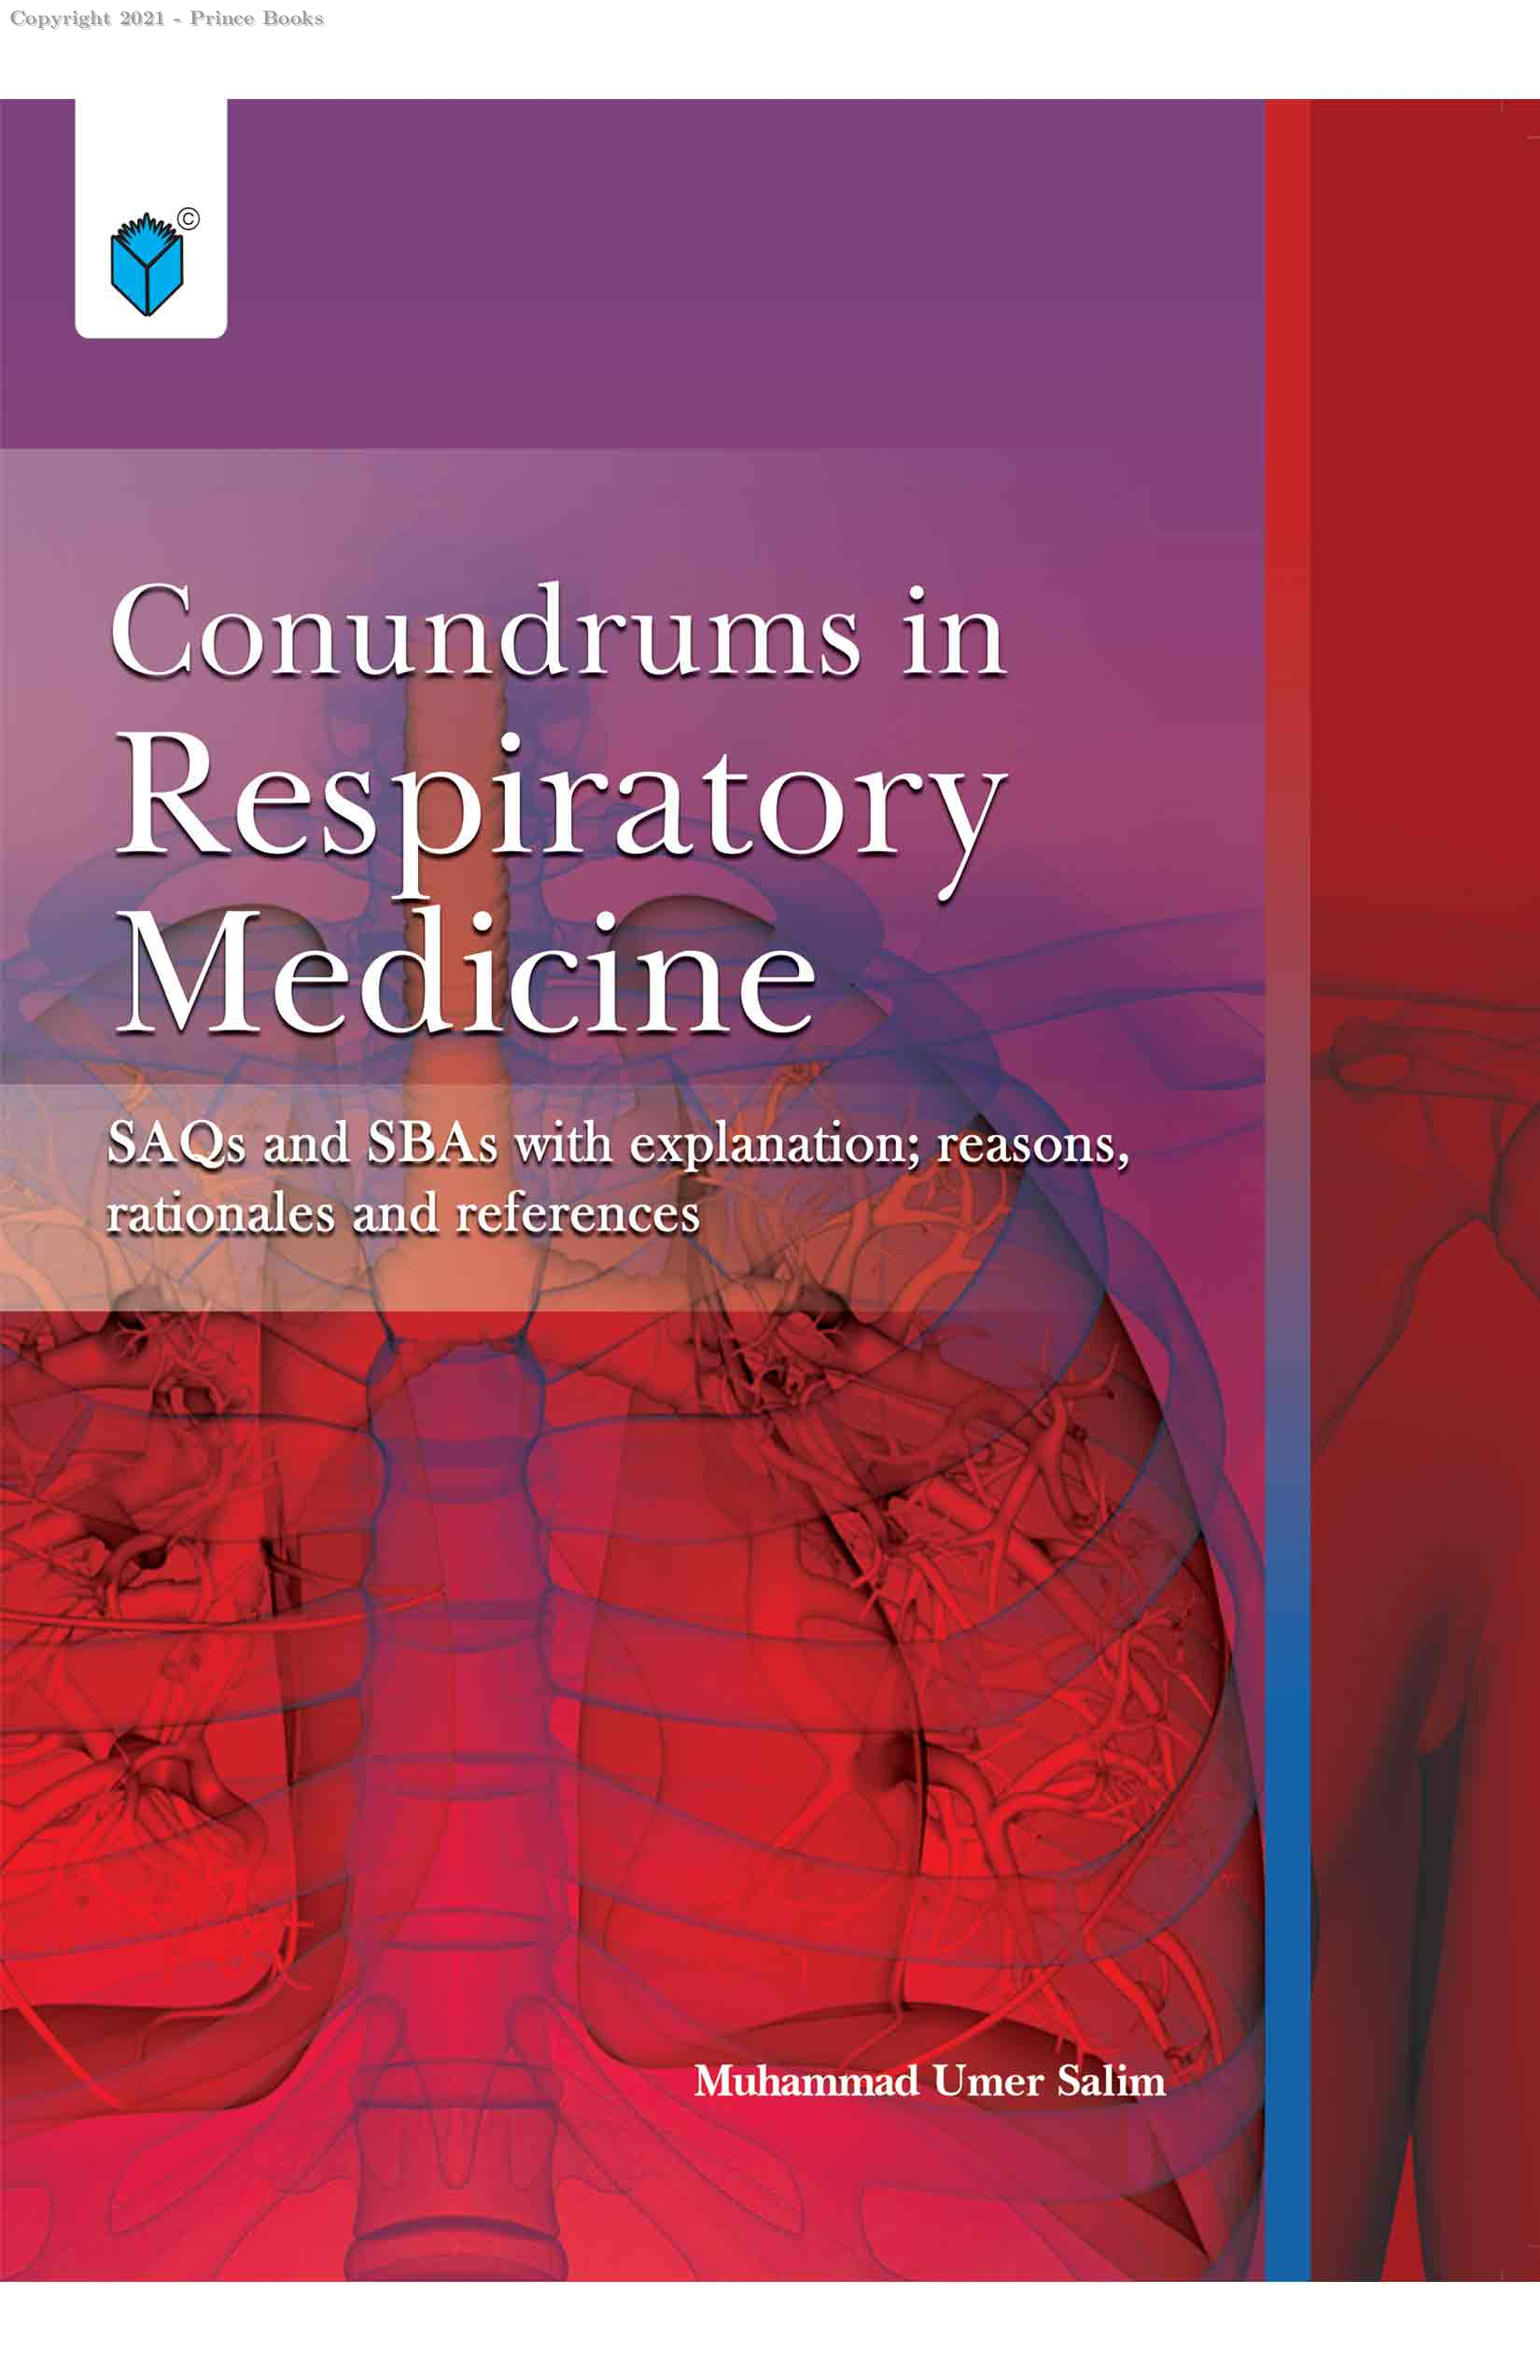 Conundrums in Respiratory Medicine